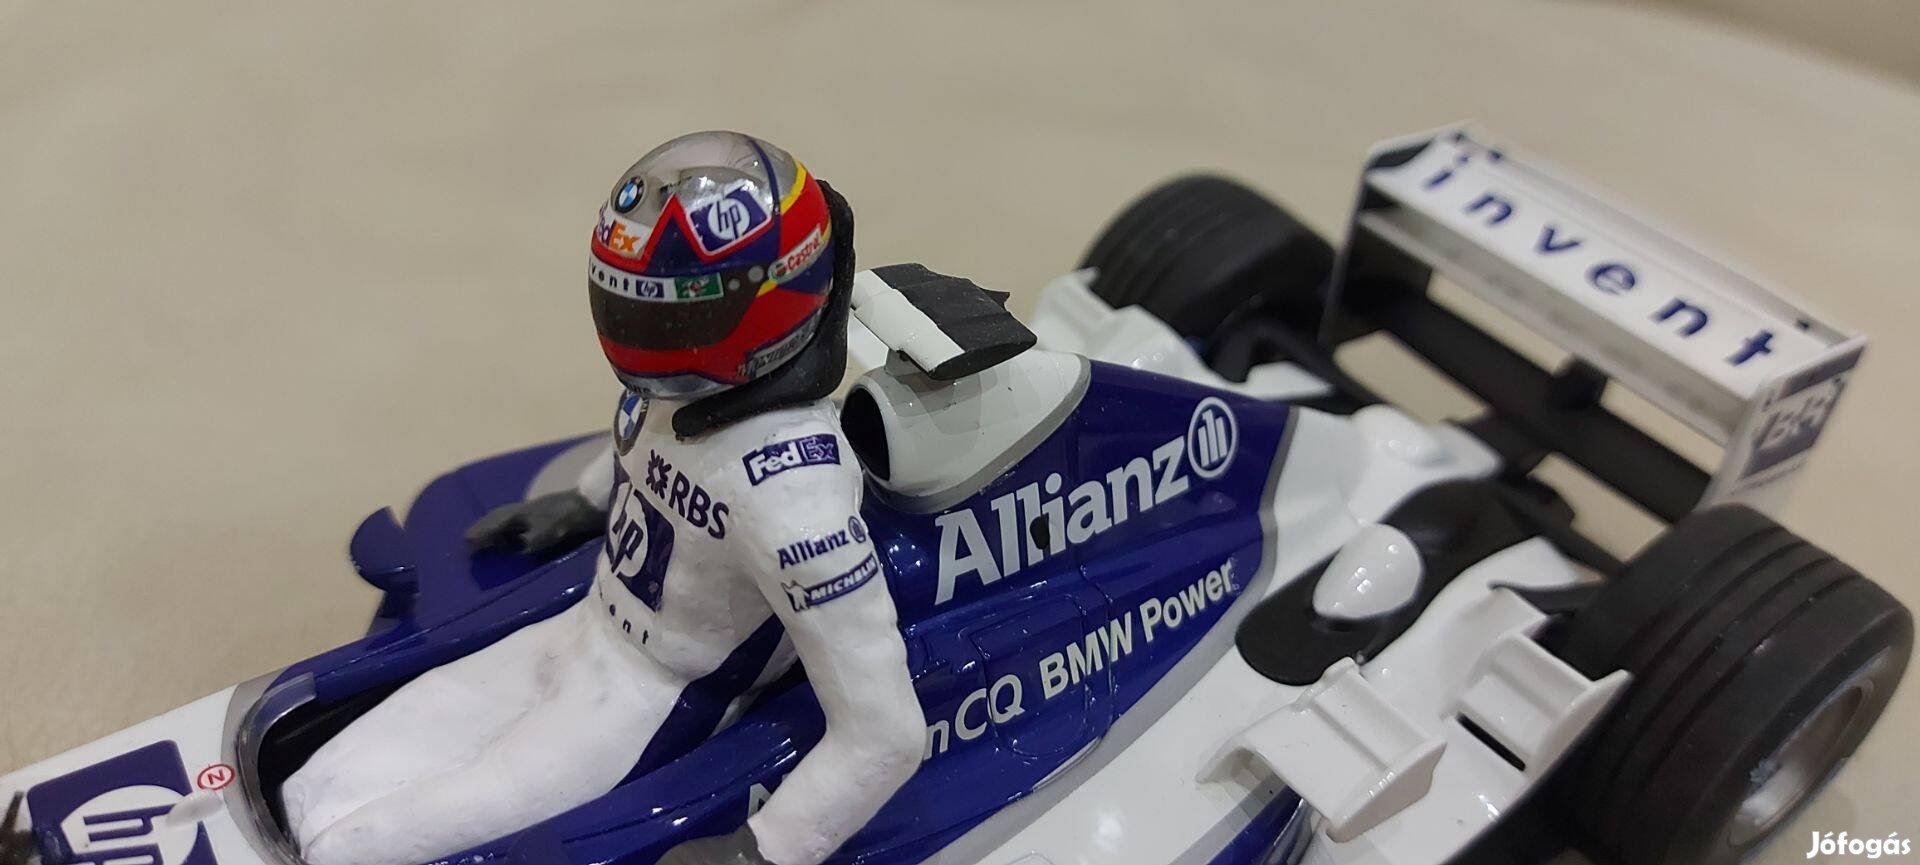 F1 Williams BMW FW25 2003 Juan Pablo Montoya 1:18 Minichamps